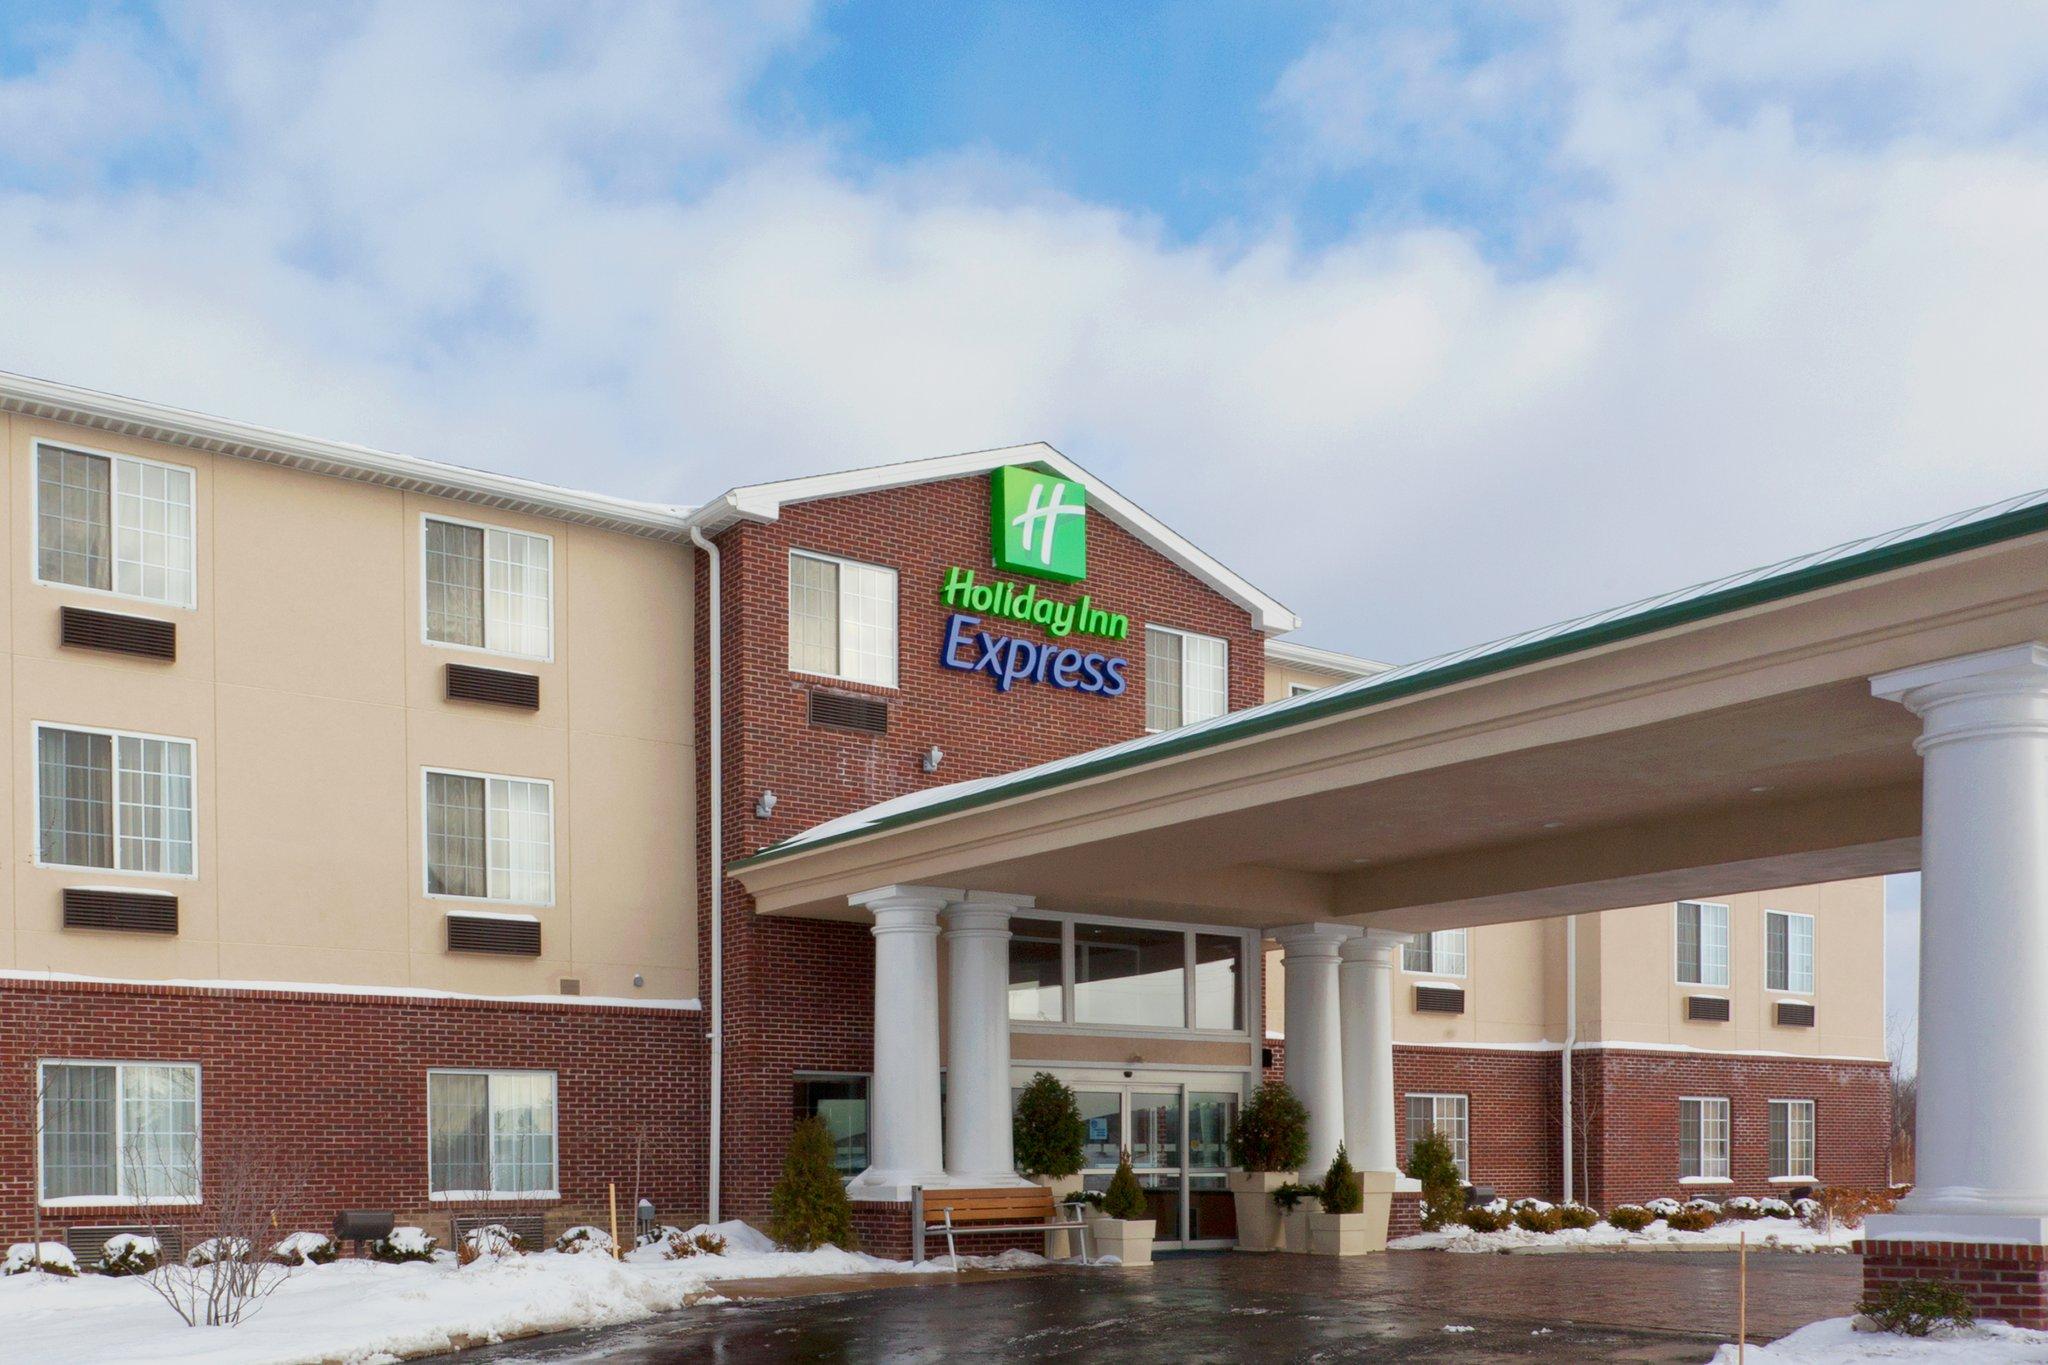 Holiday Inn Express Hotel & Suites Ashtabula-Geneva in Austinburg, OH